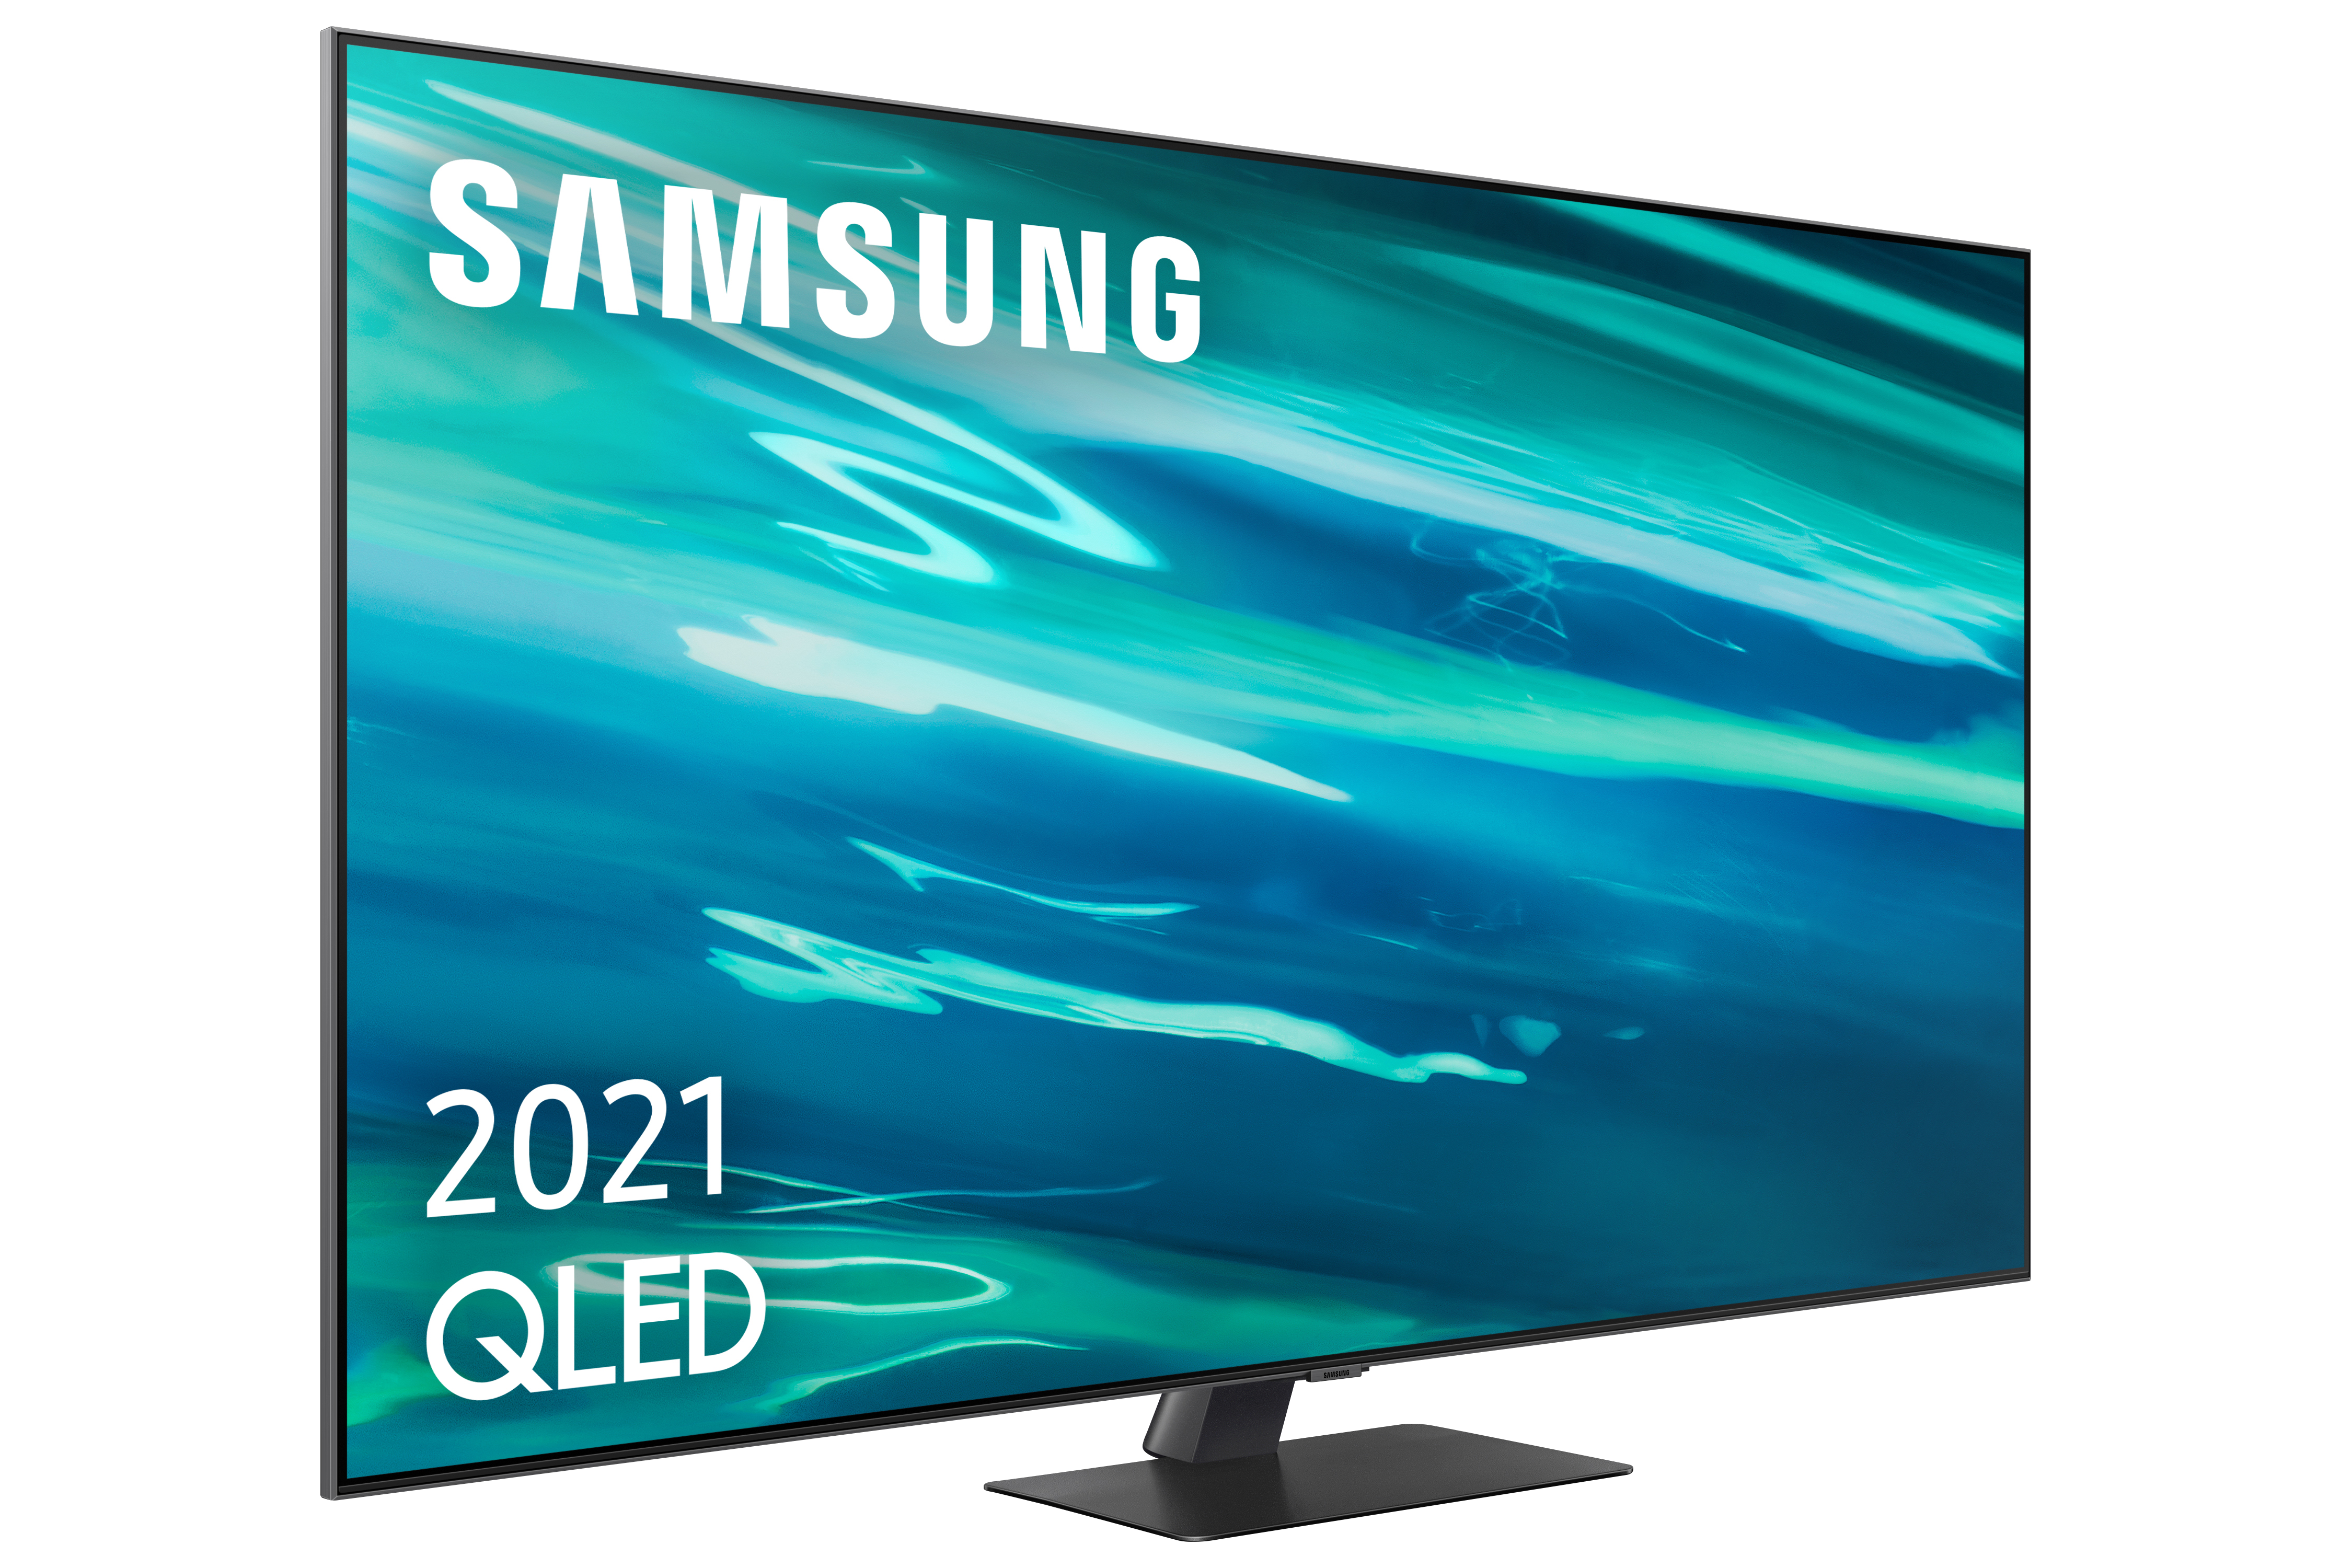 TV QLED 55" - Samsung QE55Q80AATXXC, UHD 4K, Smart TV, HDR10+, Tizen, Motion Xcelerator, Control de voz, Carbón